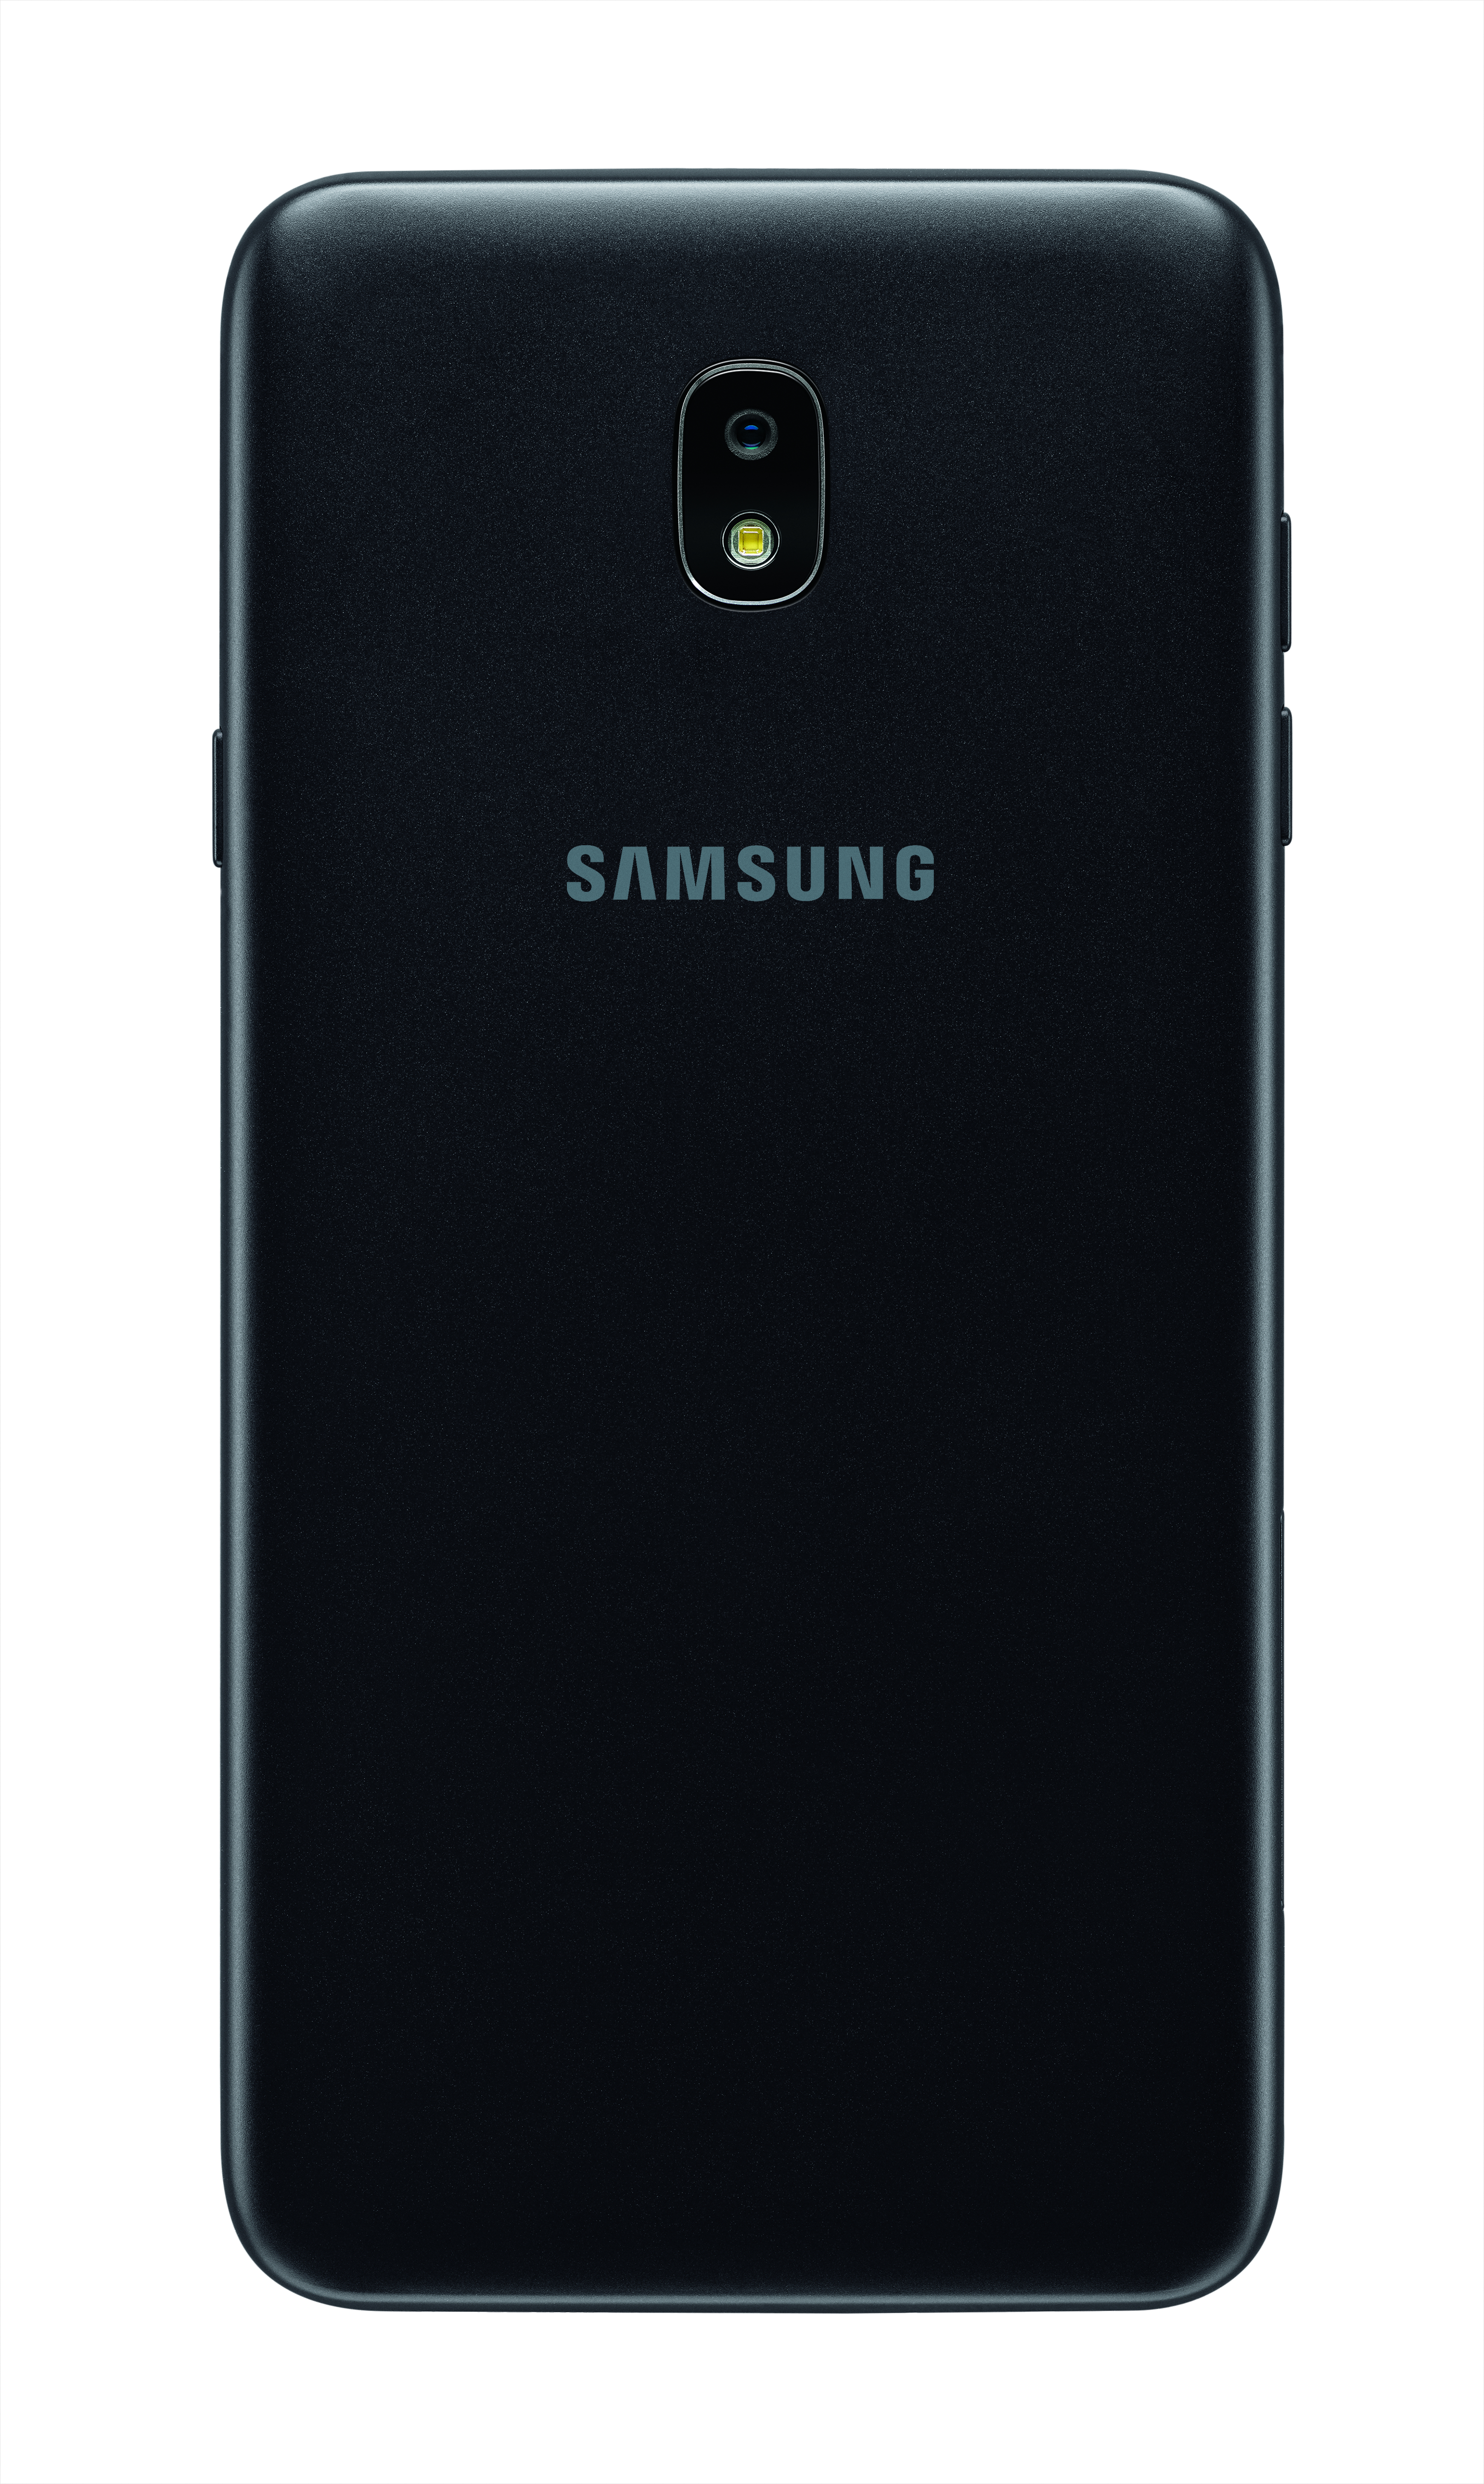 Samsung galaxy j3 android